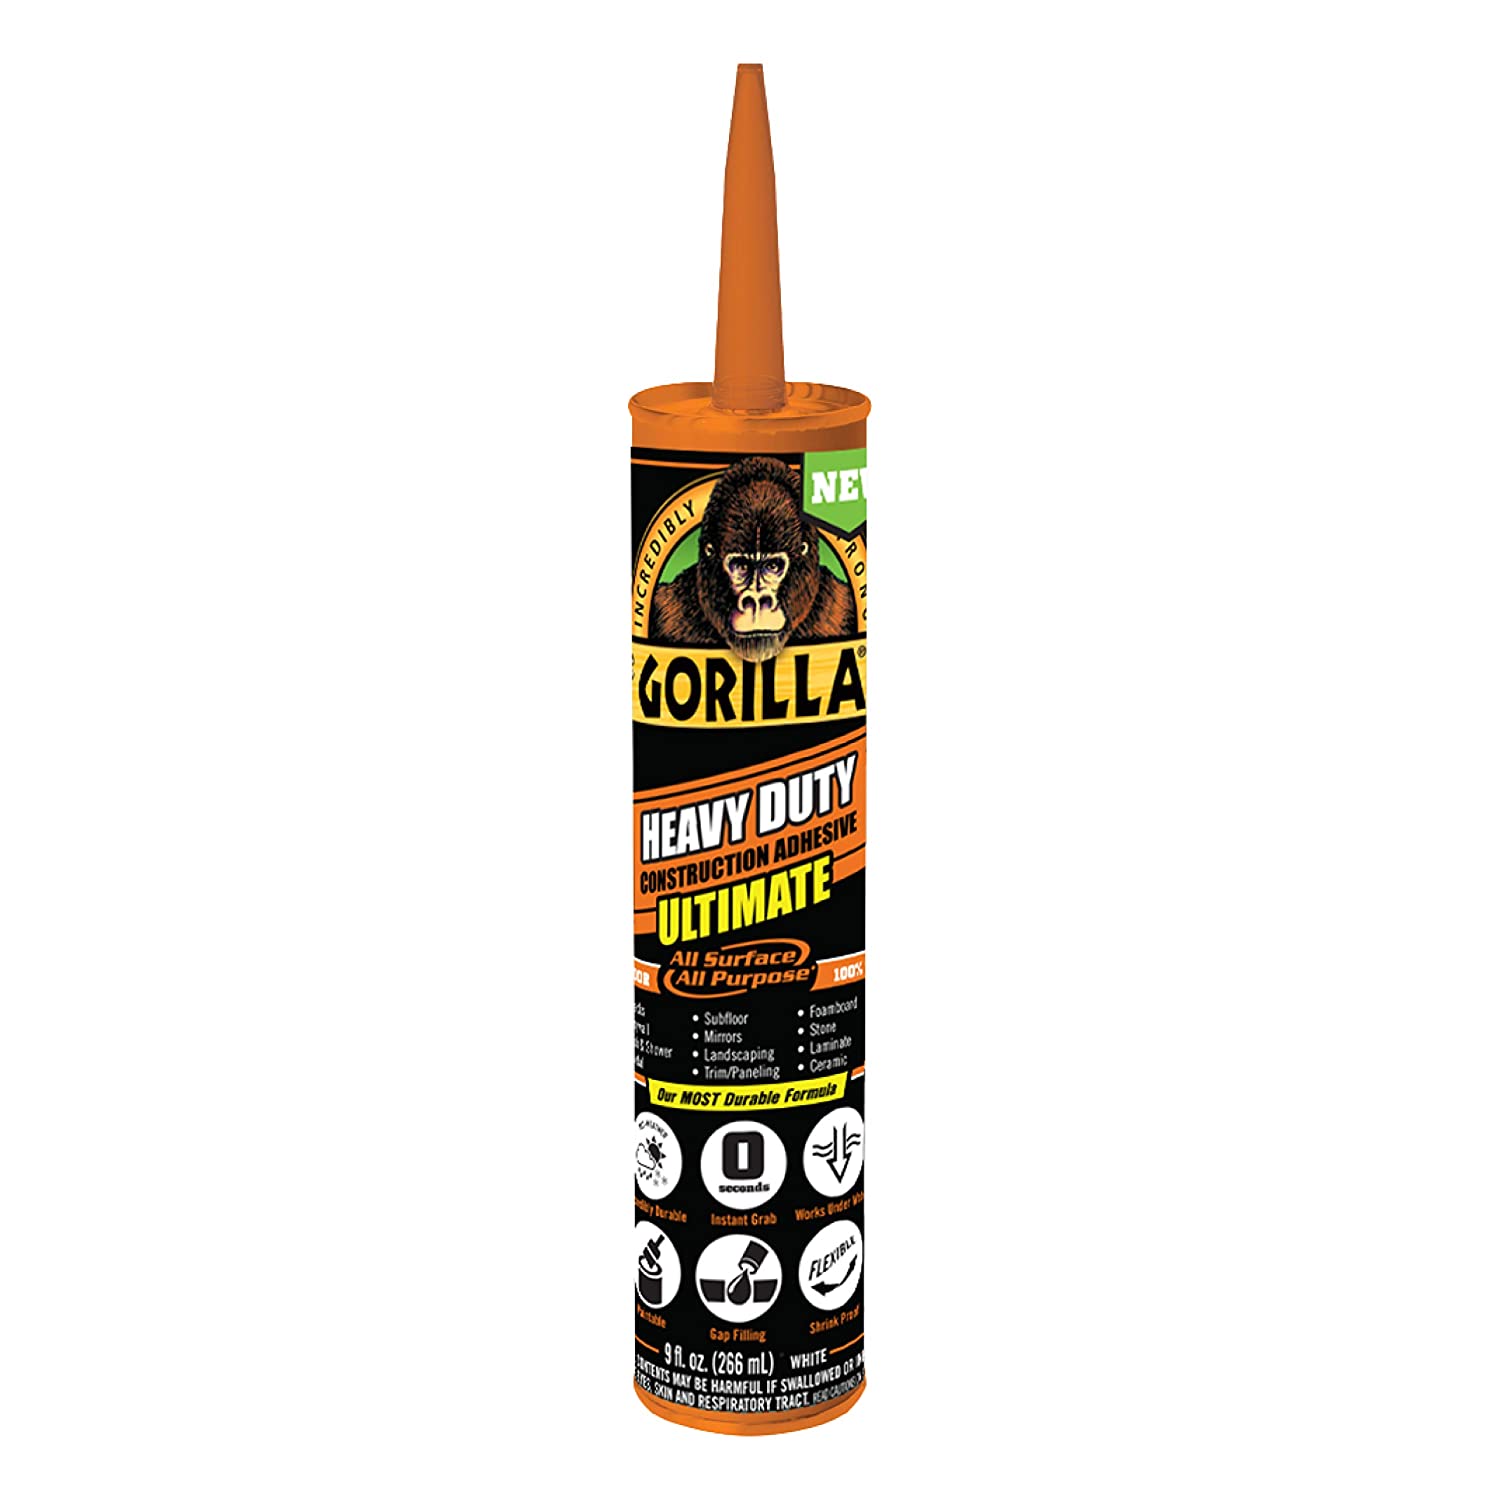 Gorilla Heavy Duty Ultimate Construction Adhesive, 9 [...]